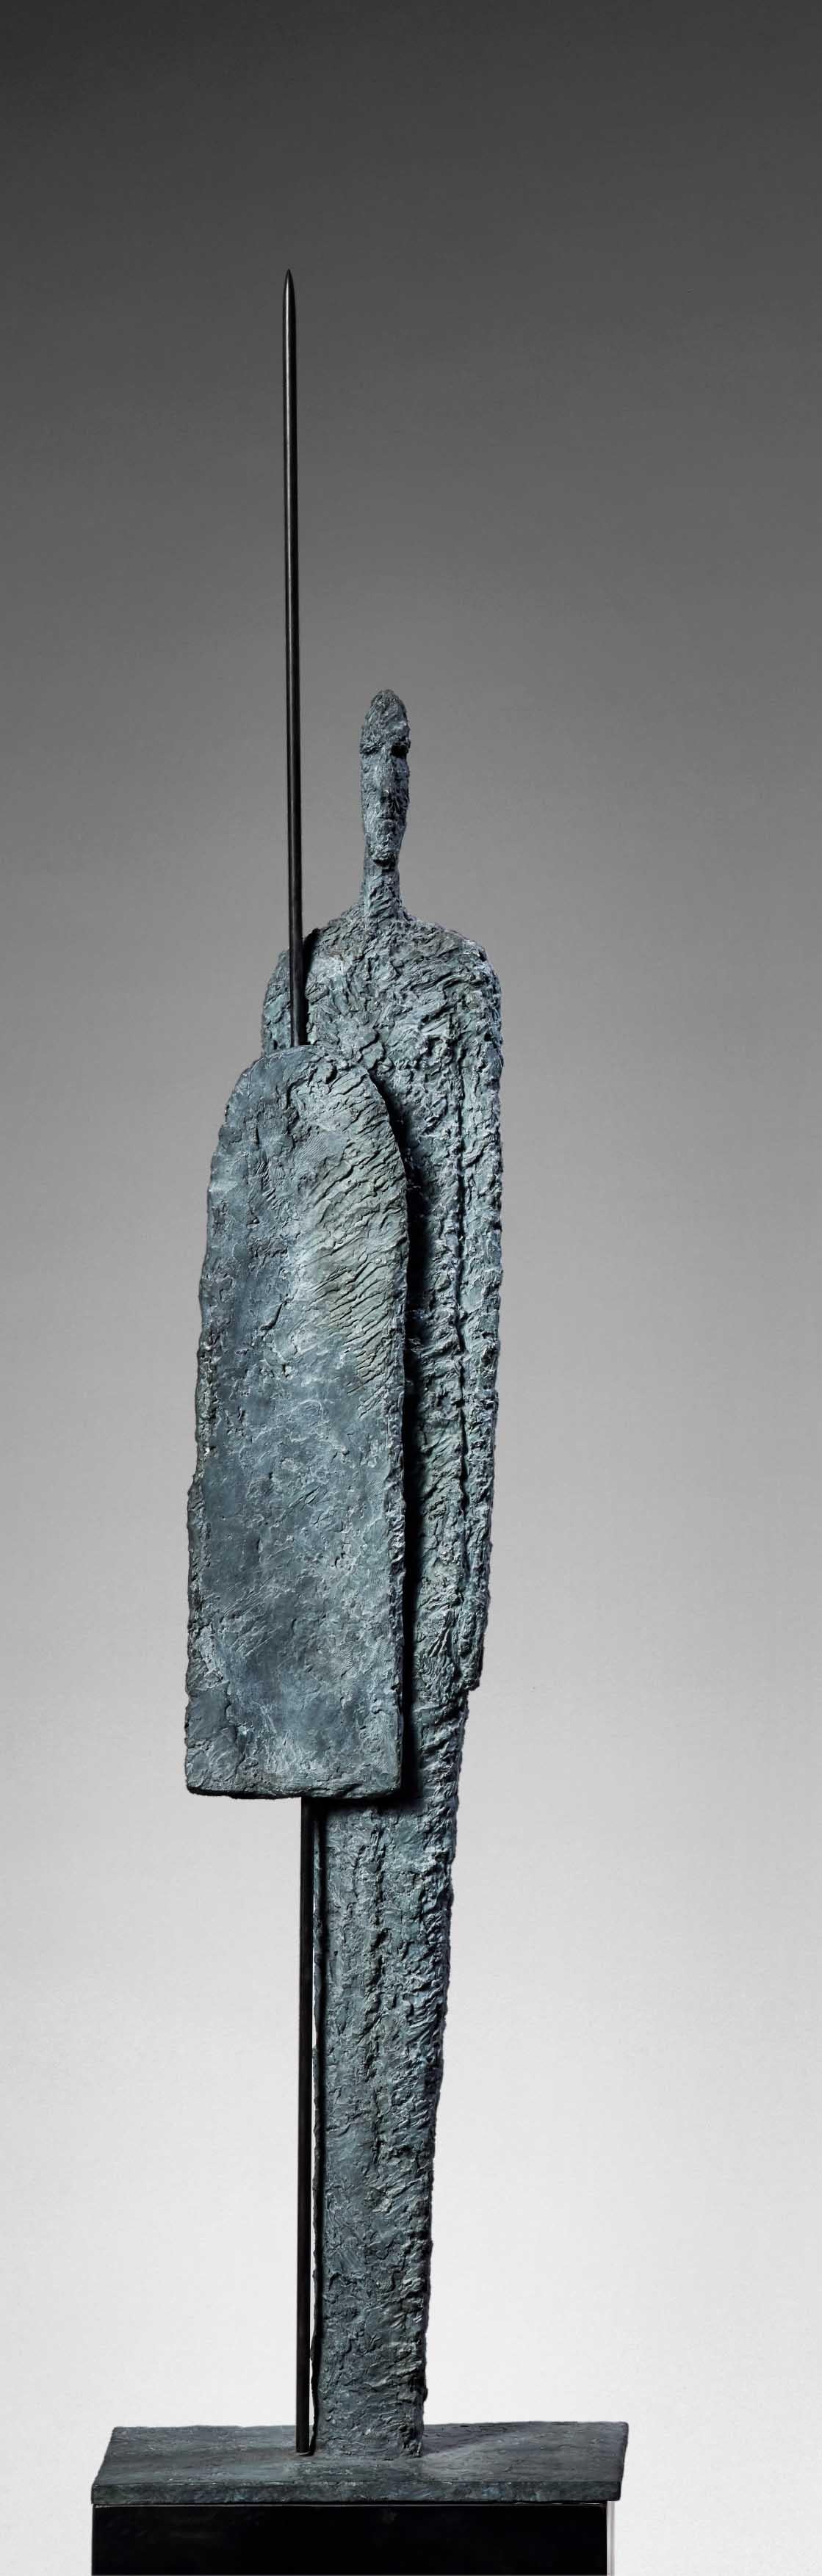 Warrior (large) by Martine Demal - Contemporary bronze sculpture, human figure